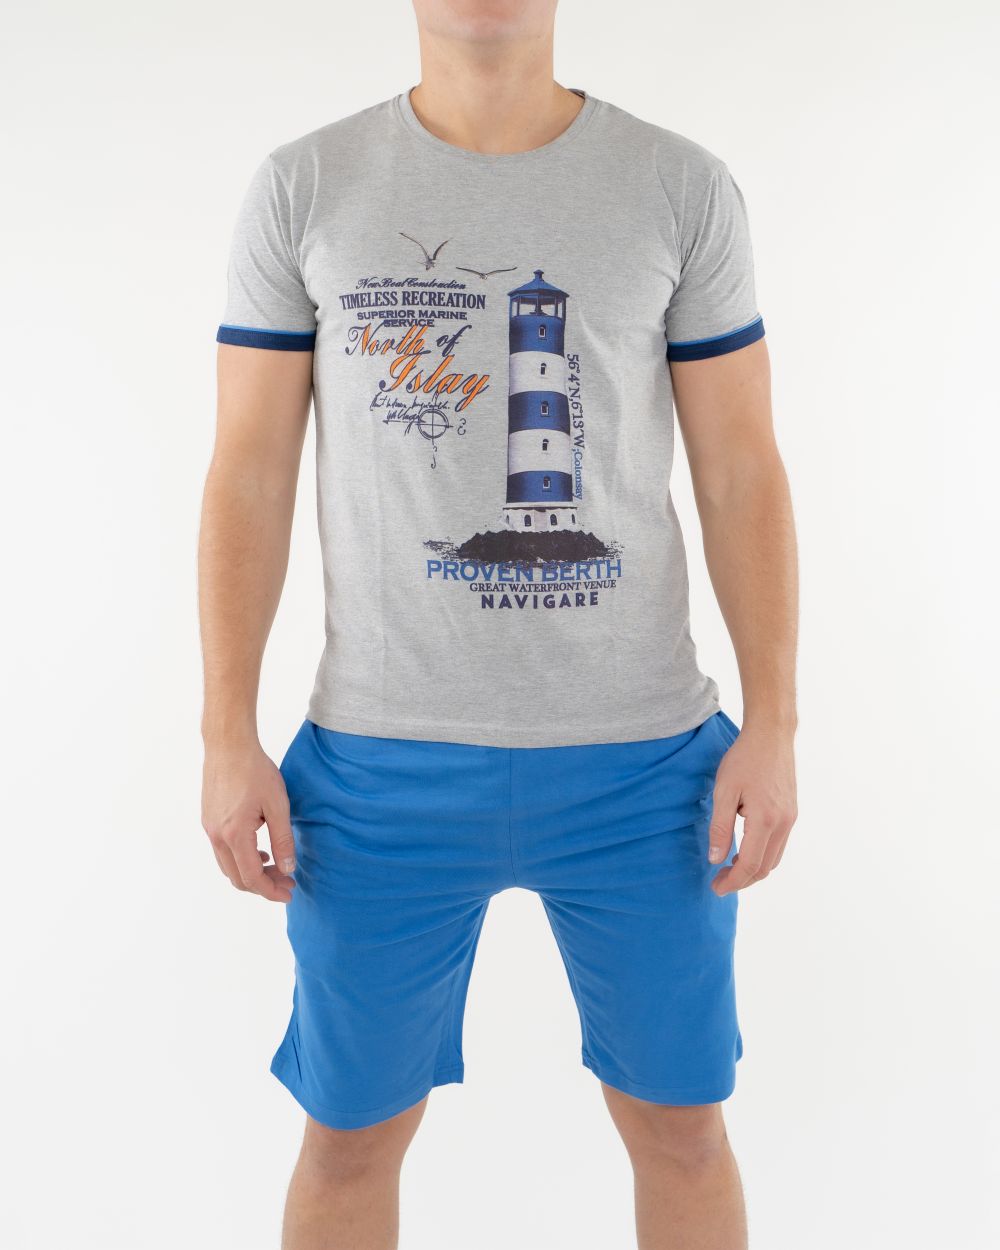 Navigare Intimo - Letnja muška pidžama svetlo sive boje